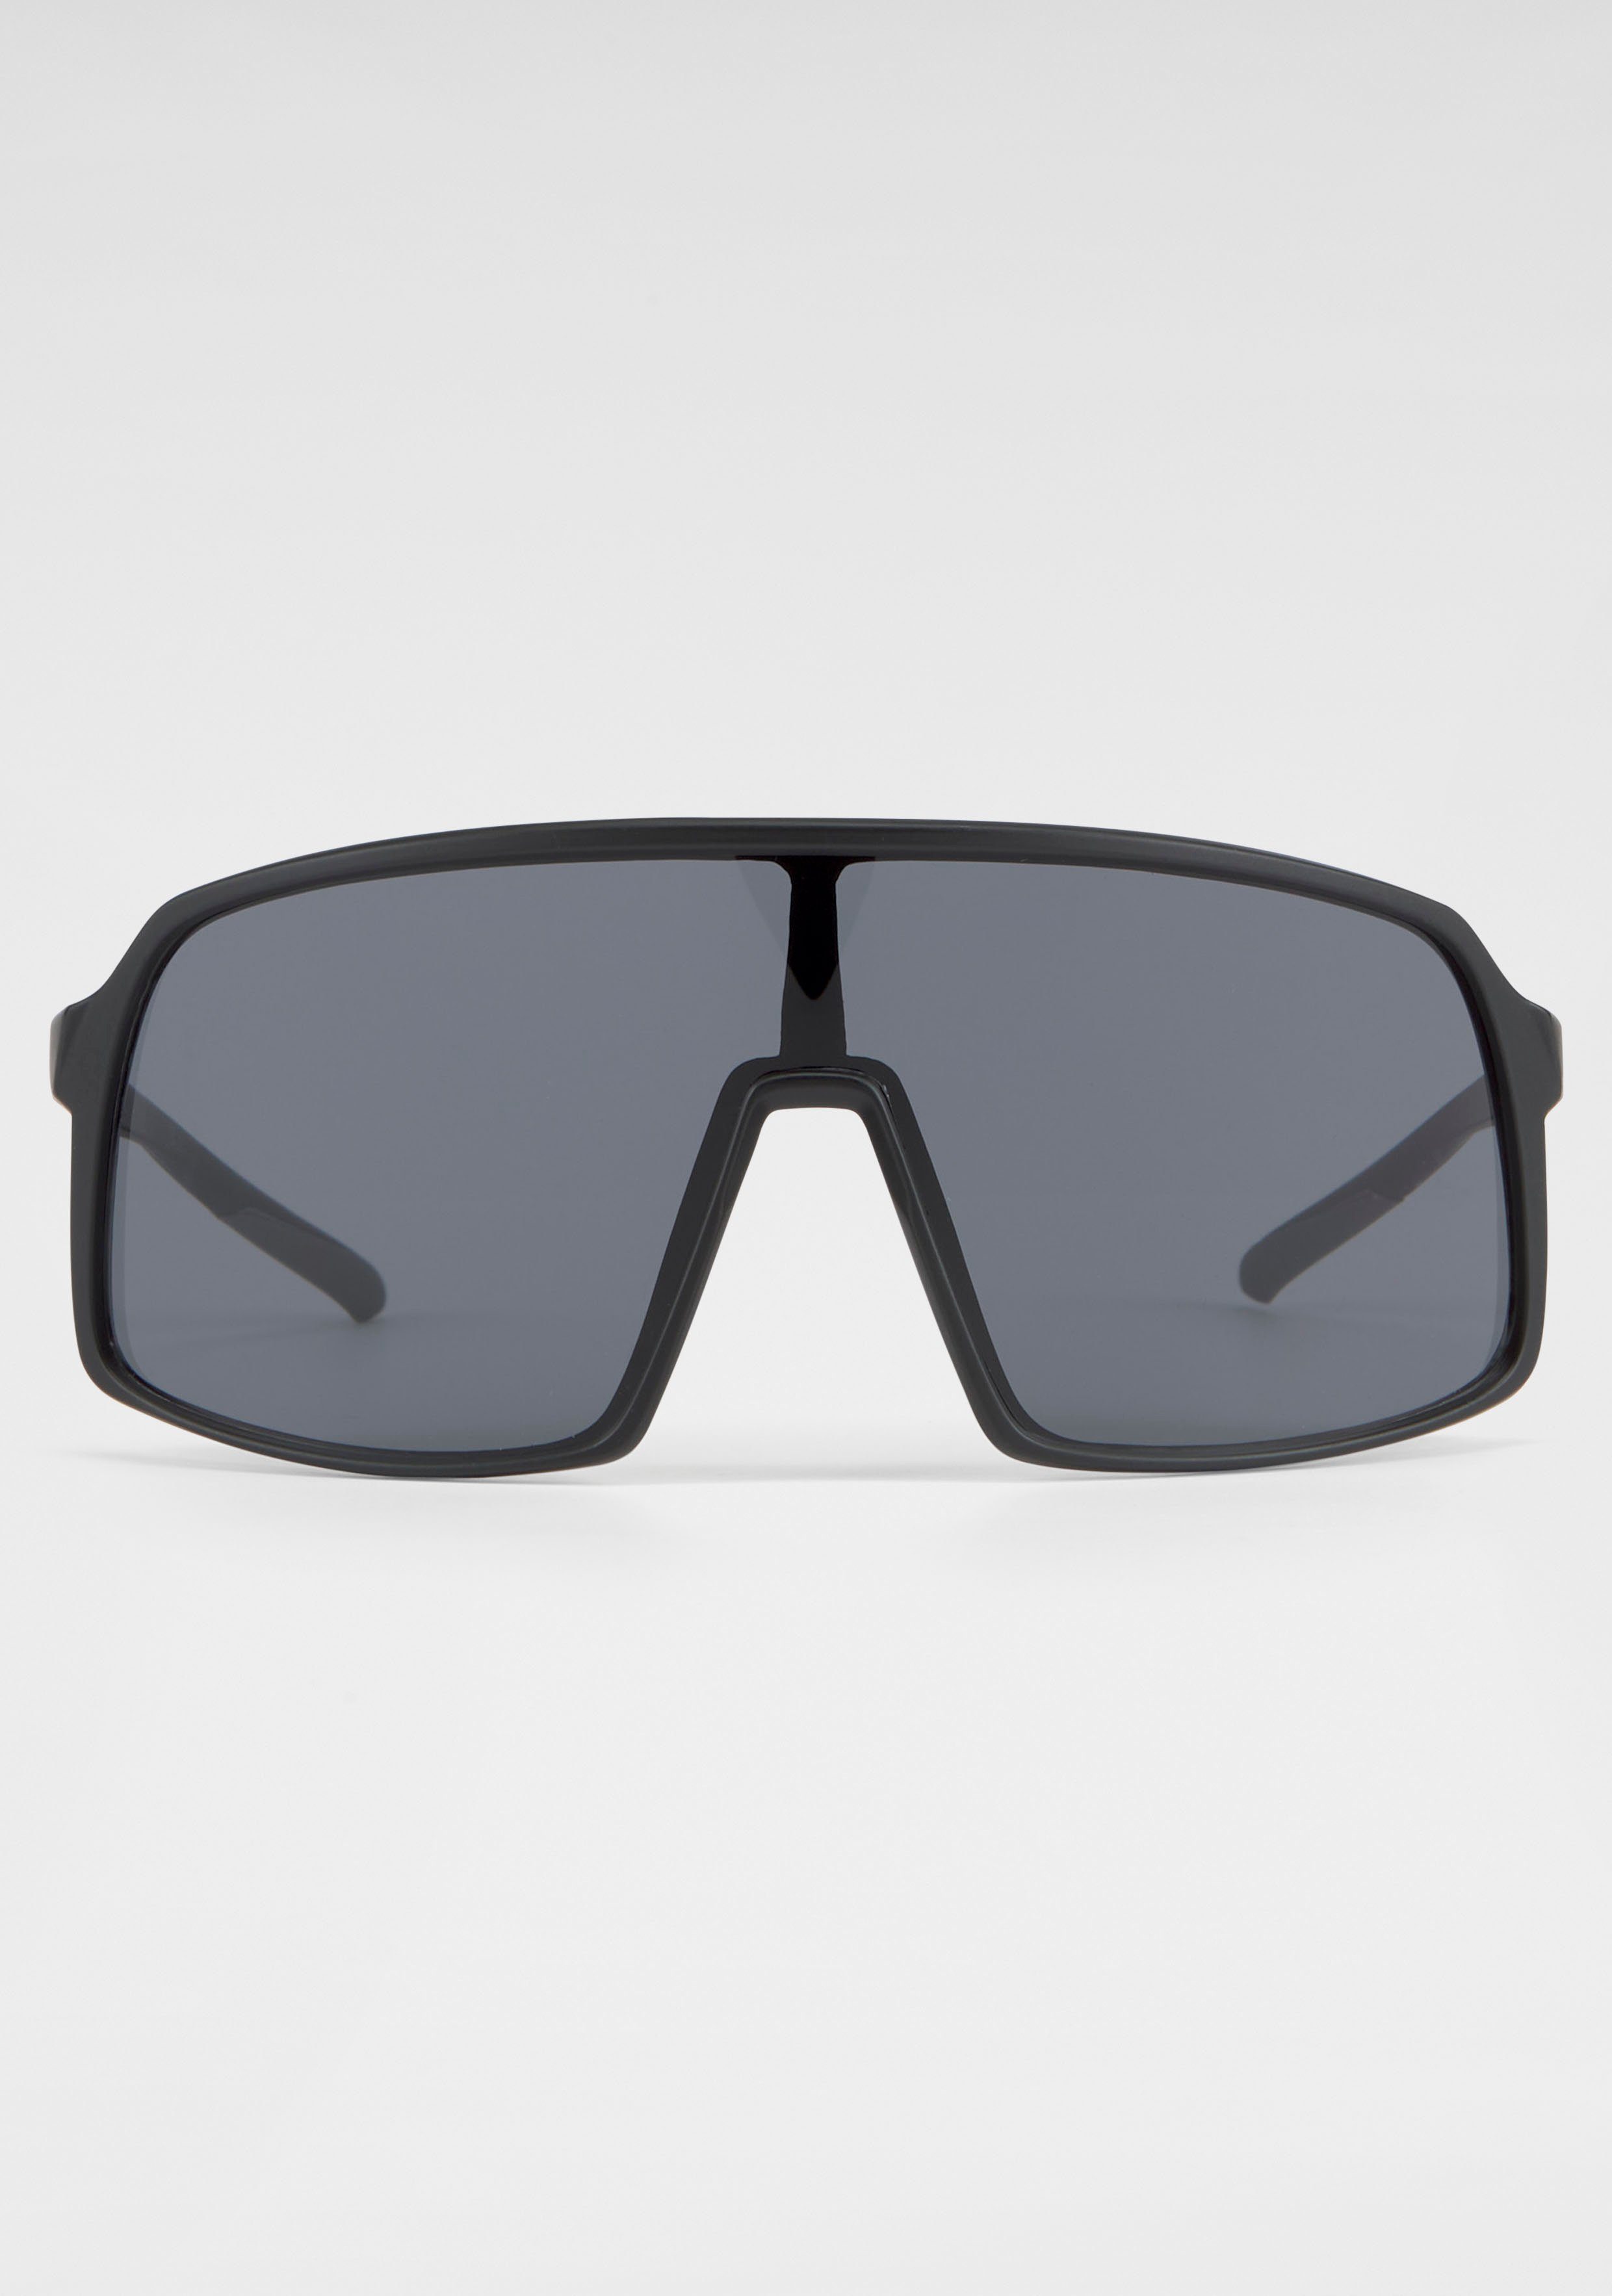 BACK IN BLACK Eyewear Sonnenbrille große Gläser schwarz